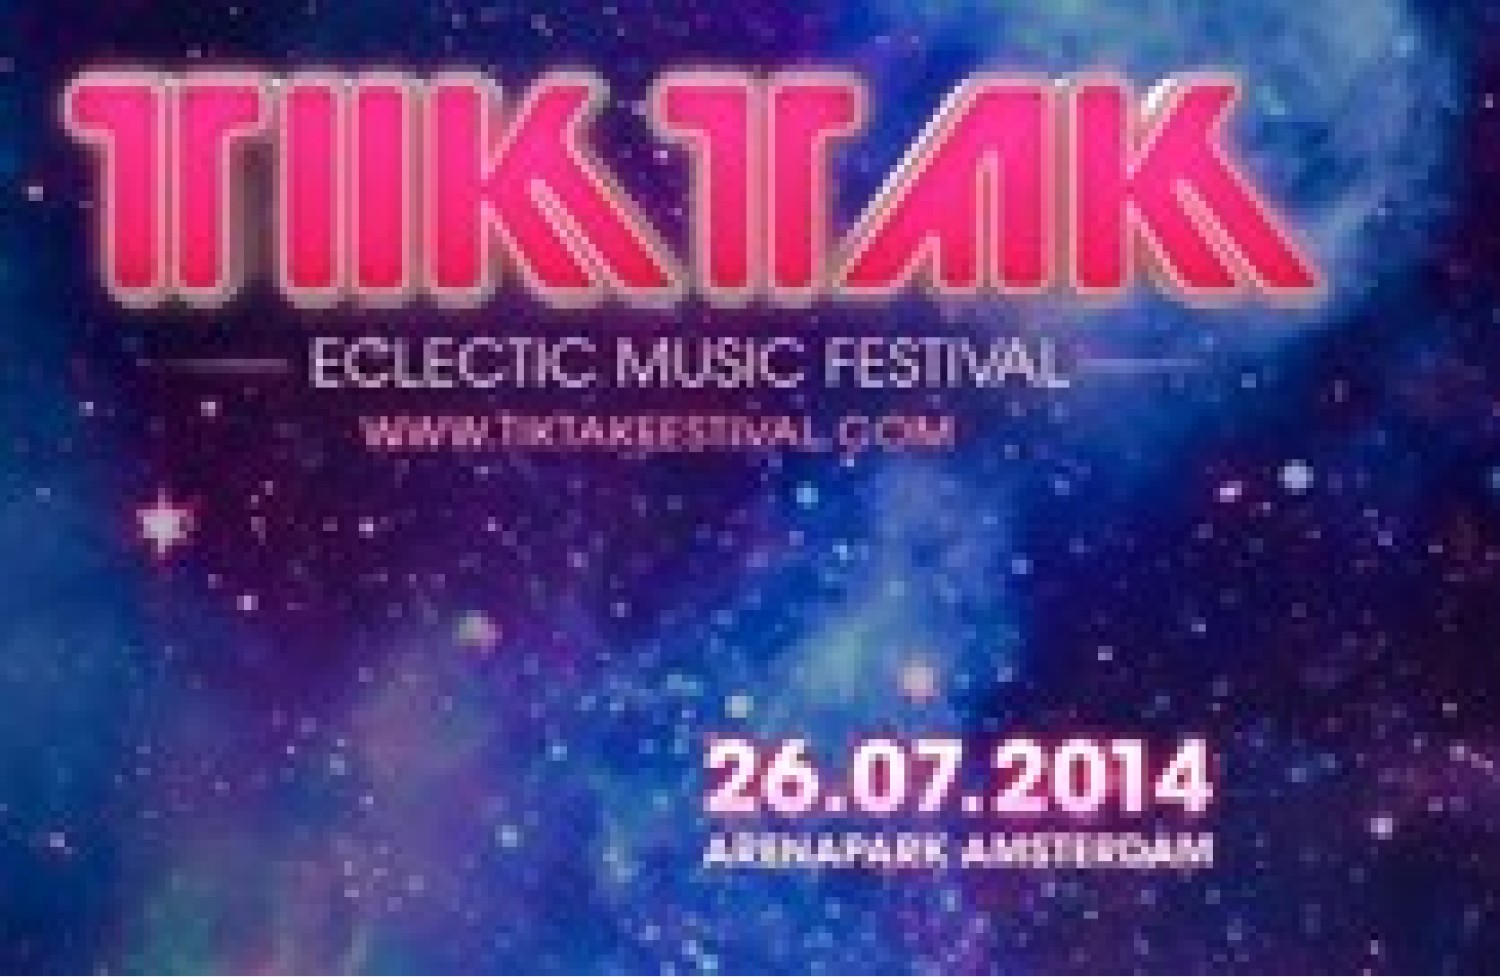 Party report: TIKTAK Eclectic Music Festival, Amsterdam (26-07-2014)